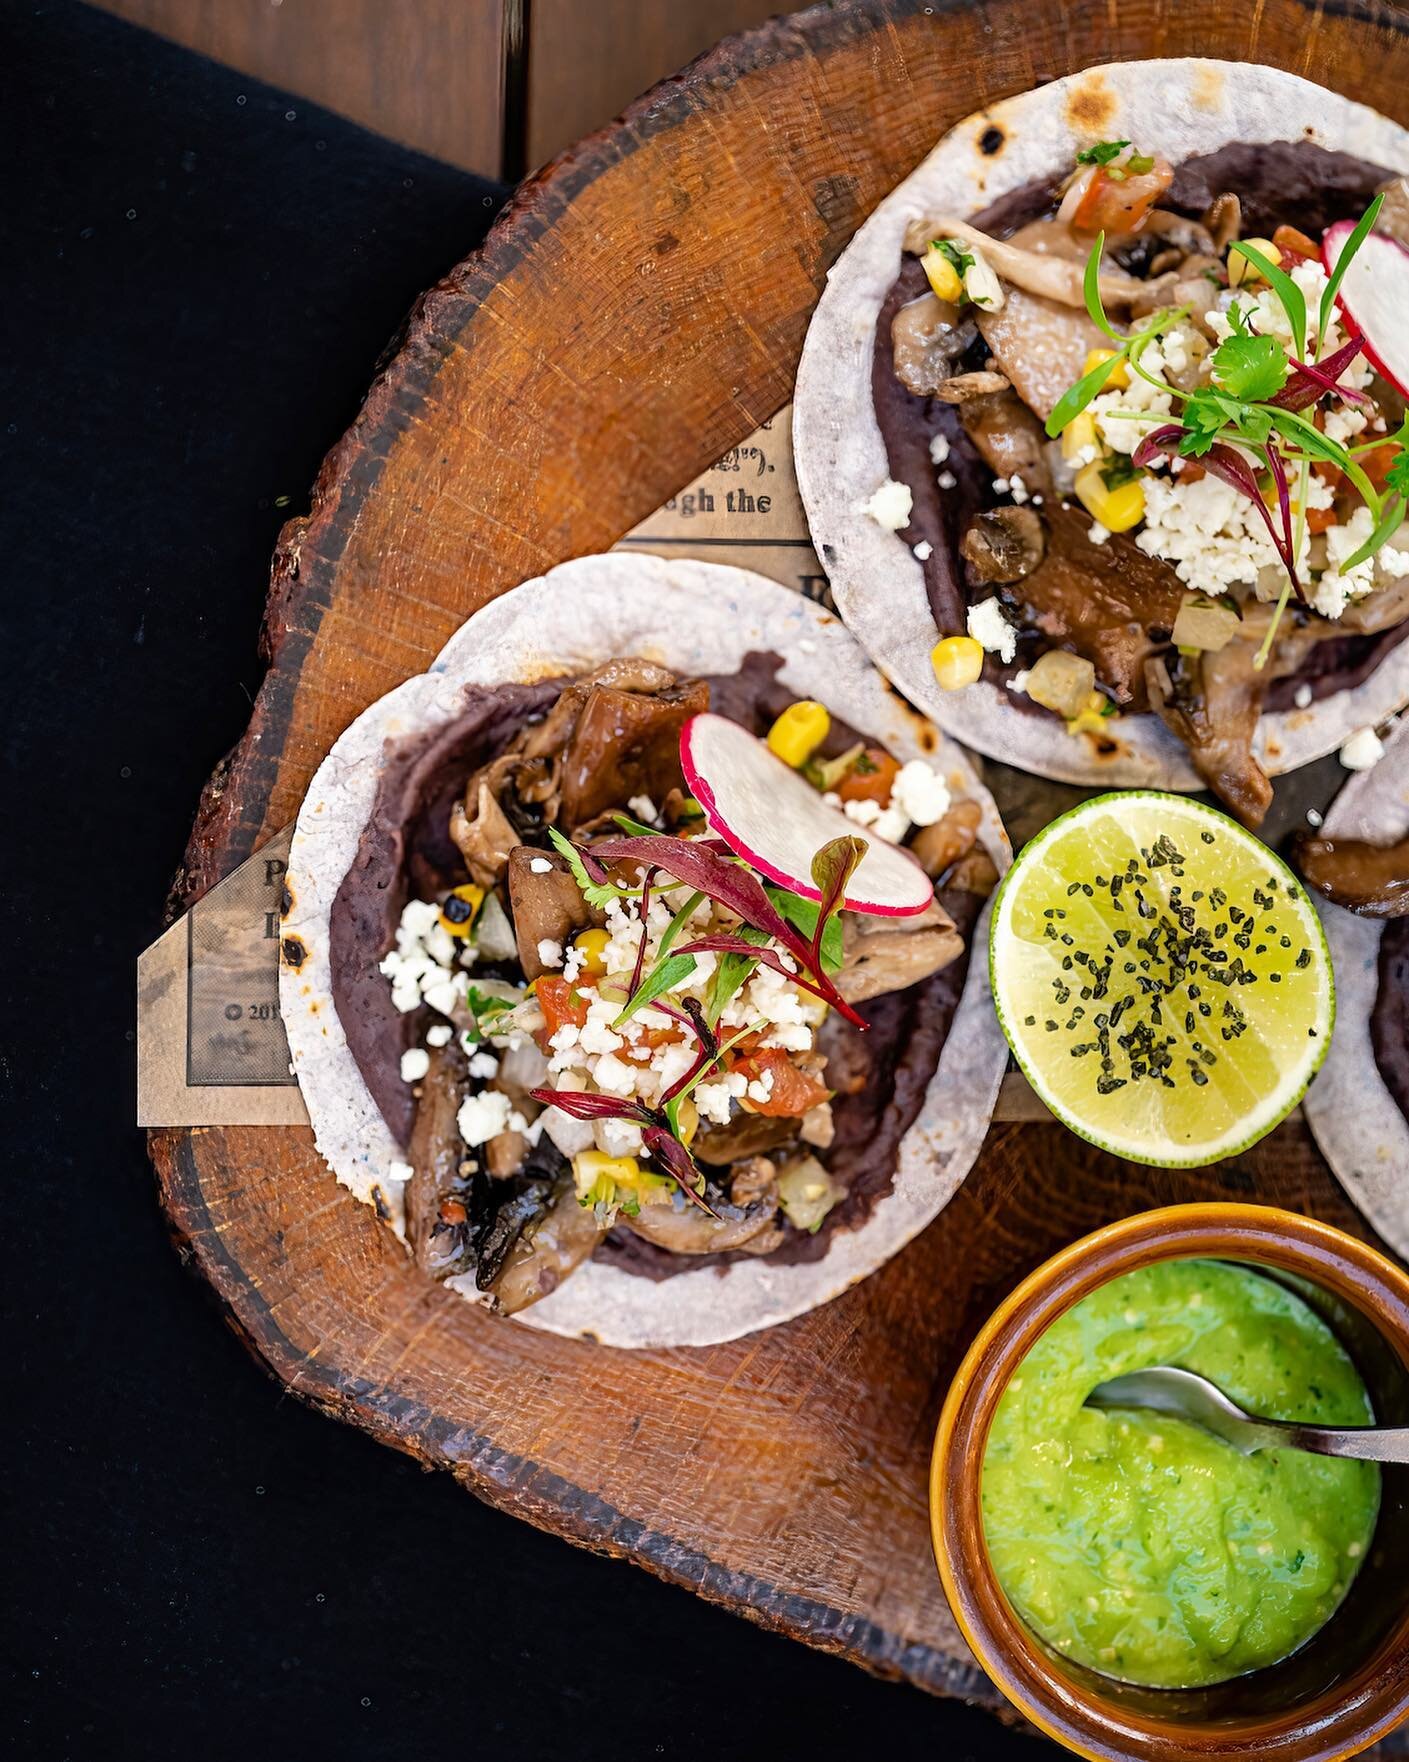 A vegetarian's dream: Our Tacos de Hongos a la Le&ntilde;a.
.
.
.
.
.
#DlenaDC #RSHospitality #ChefRichardSandoval #WashingtonDC #MtVernonTriangle #DistrictofColumbia #DistrictEats #DCeats